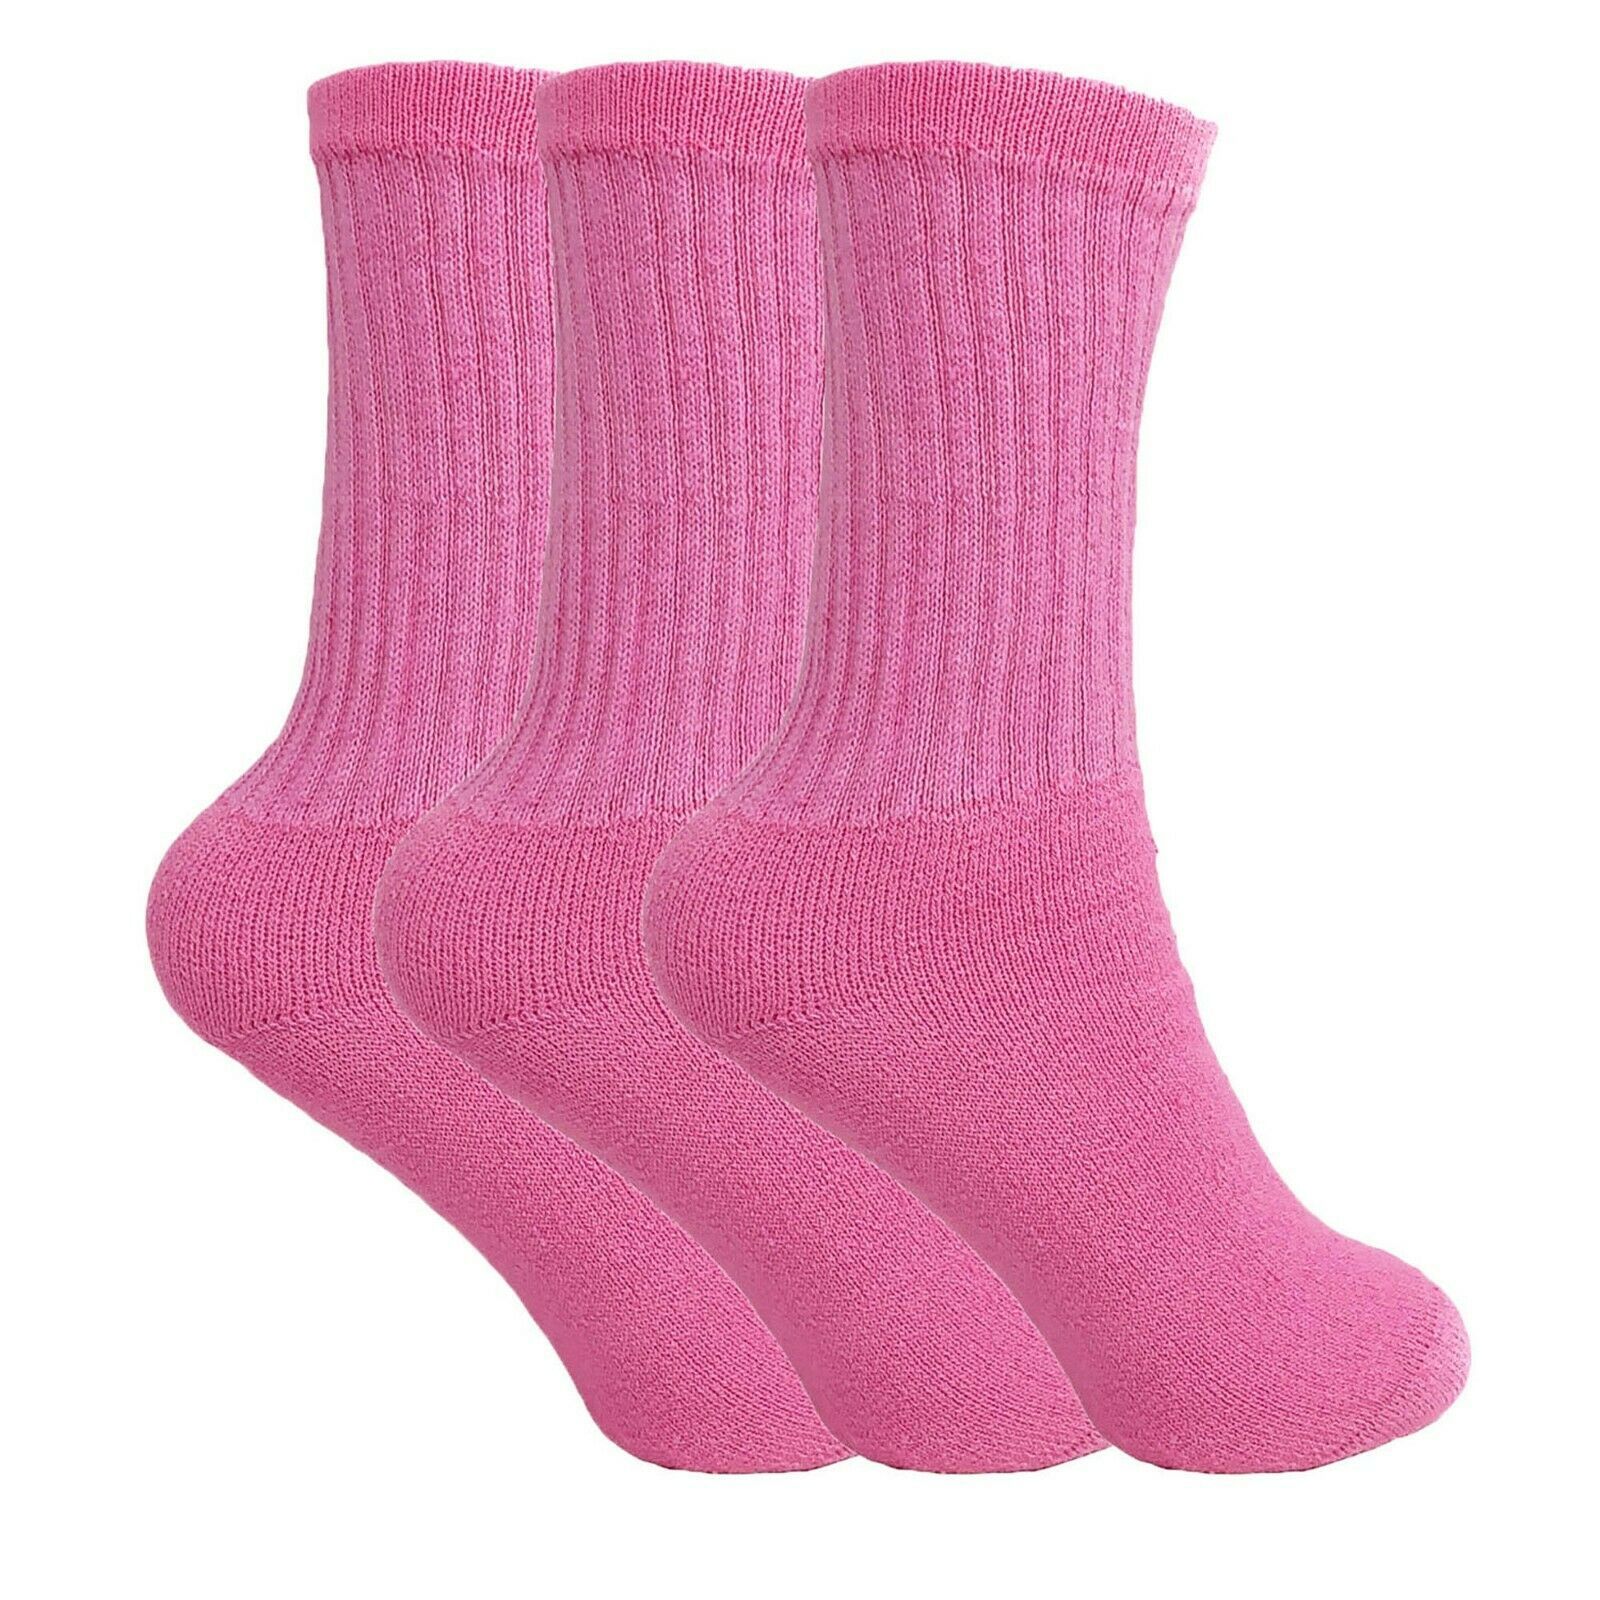 Cotton Crew Socks for Women 3 PAIRS Smooth Toe Seam Socks